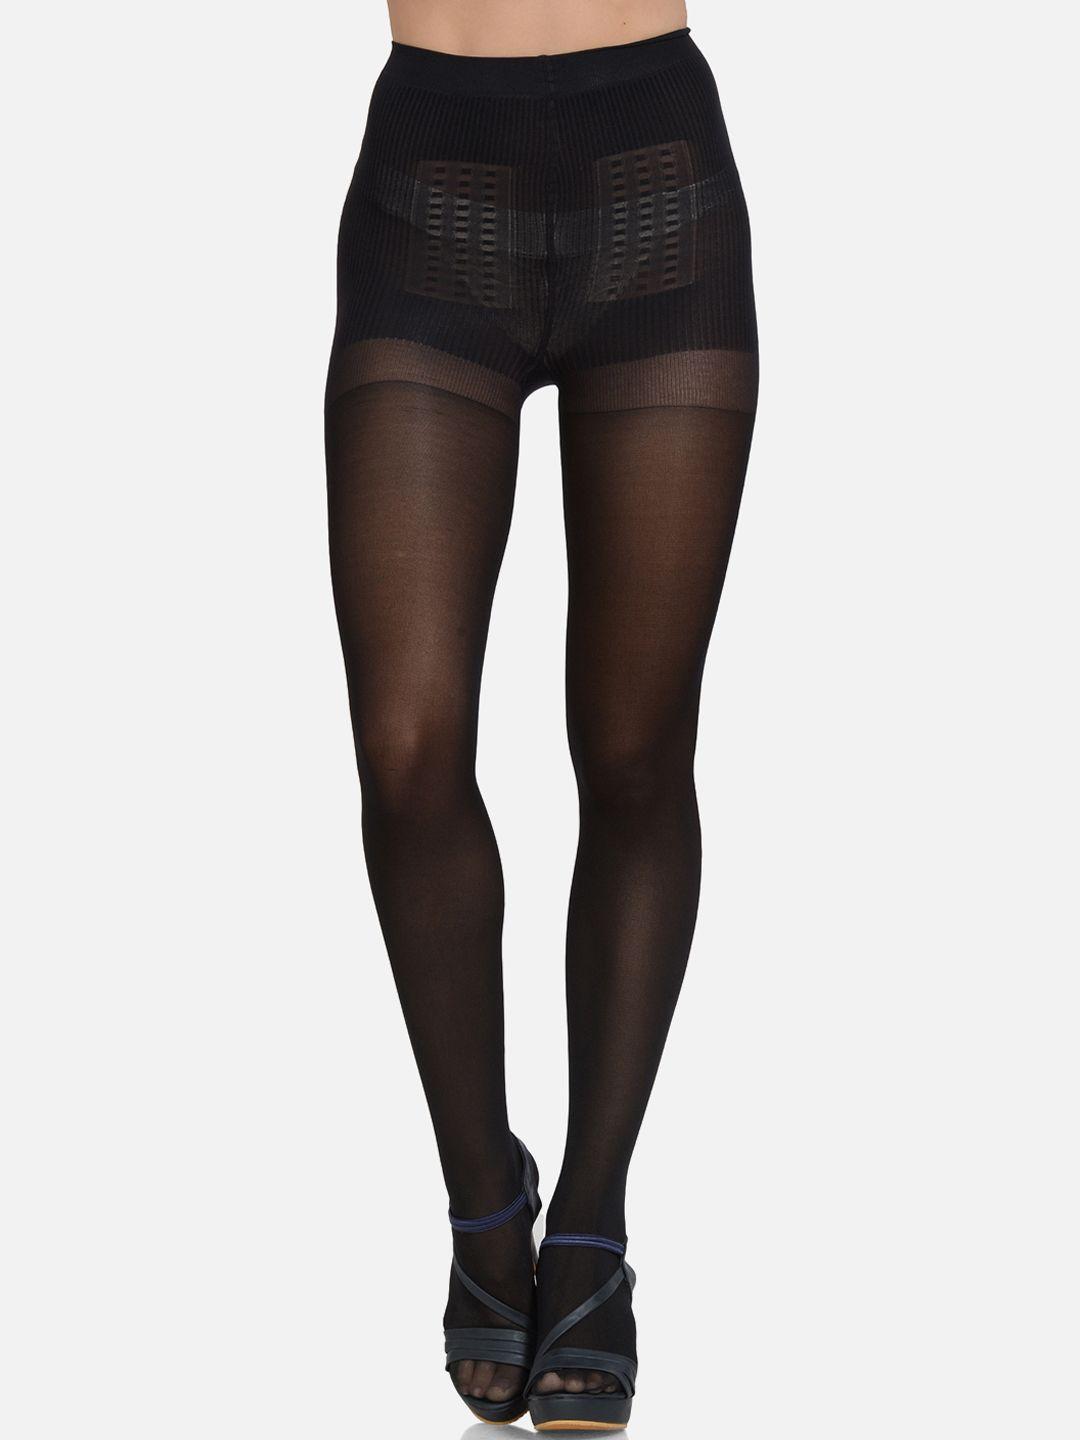 mod & shy women black solid semi-sheer thigh-high pantyhose stockings